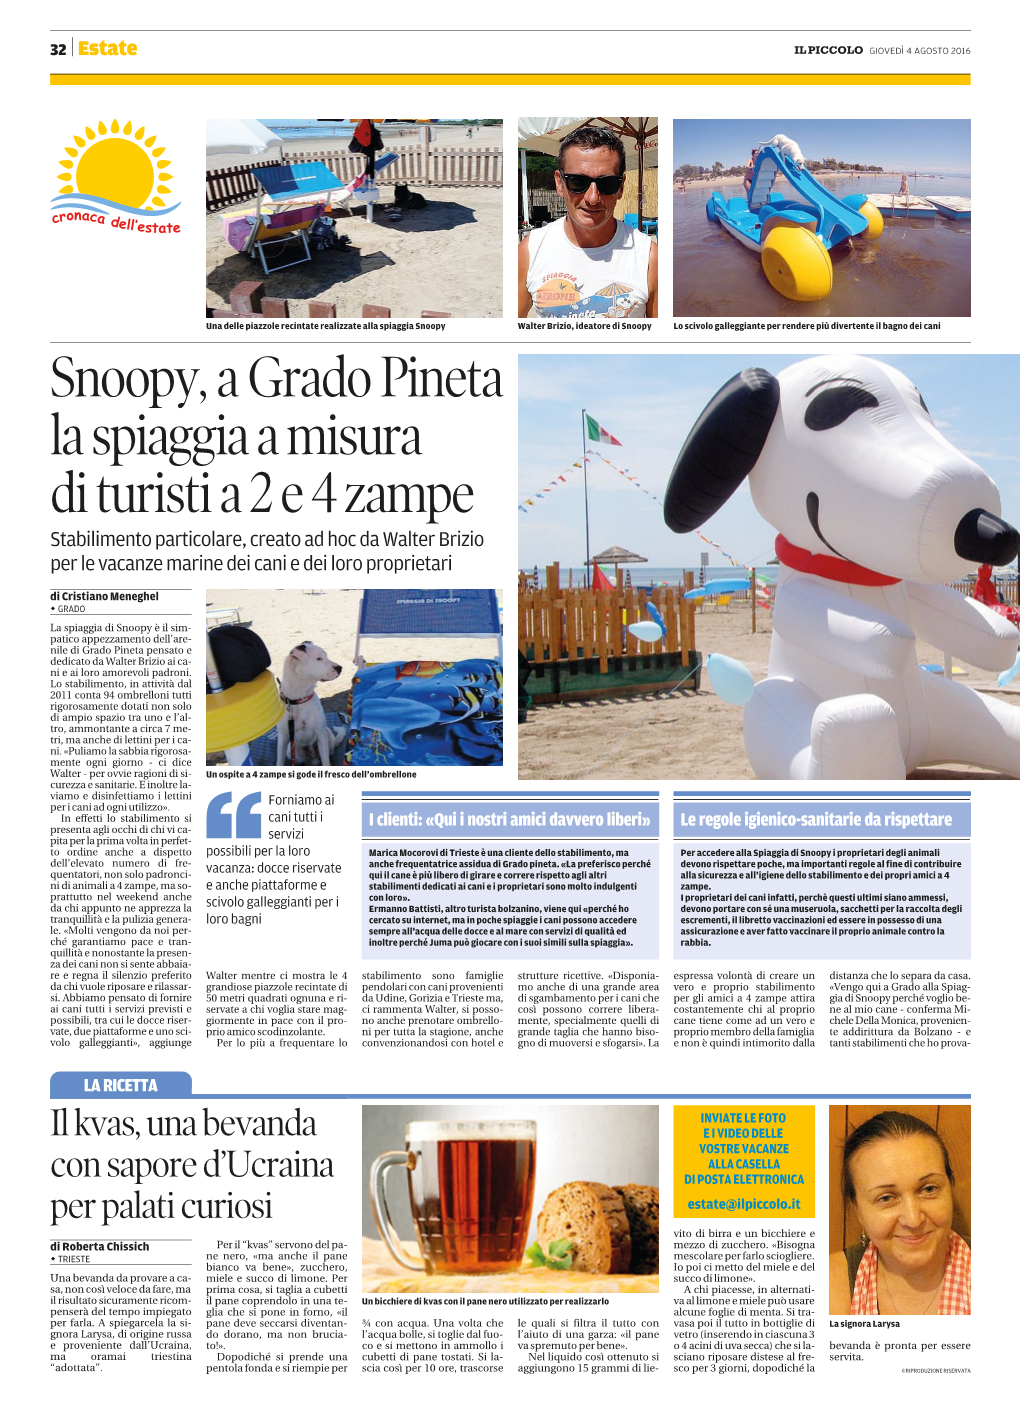 Snoopy, a Grado Pineta Laspiaggiaamisura